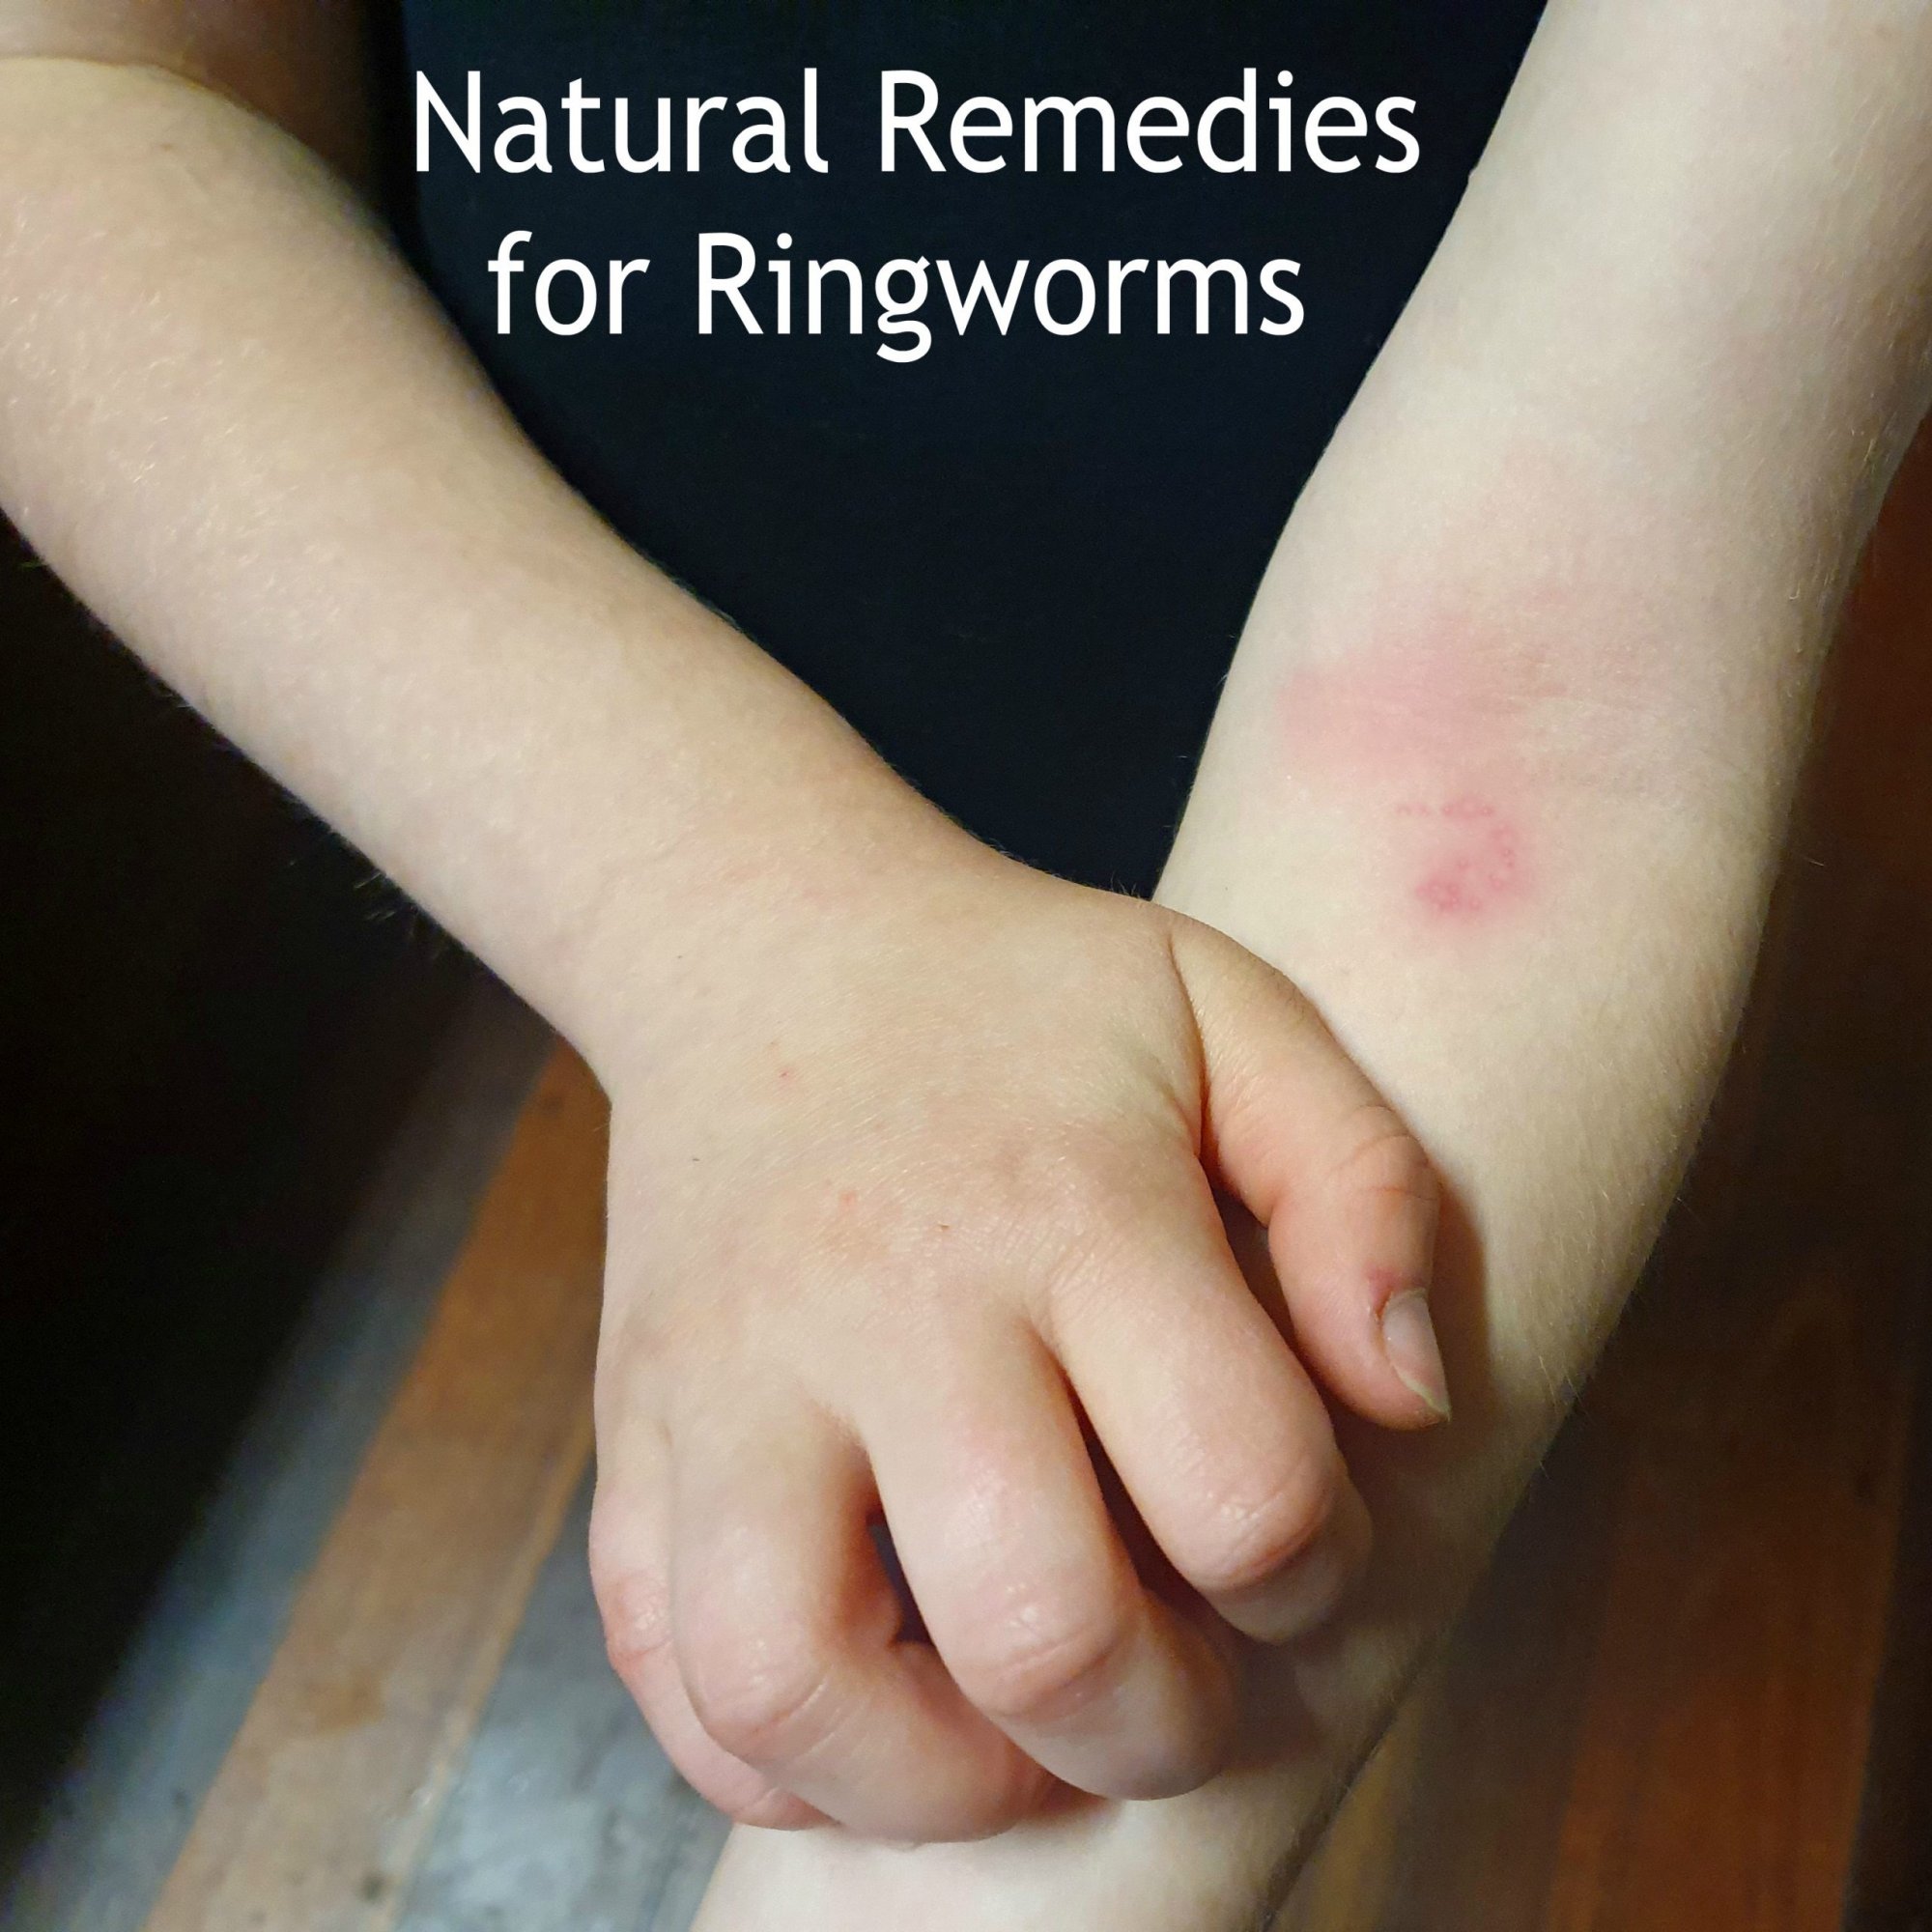 Ringworm | Types of Diseases | Fungal Diseases | CDC